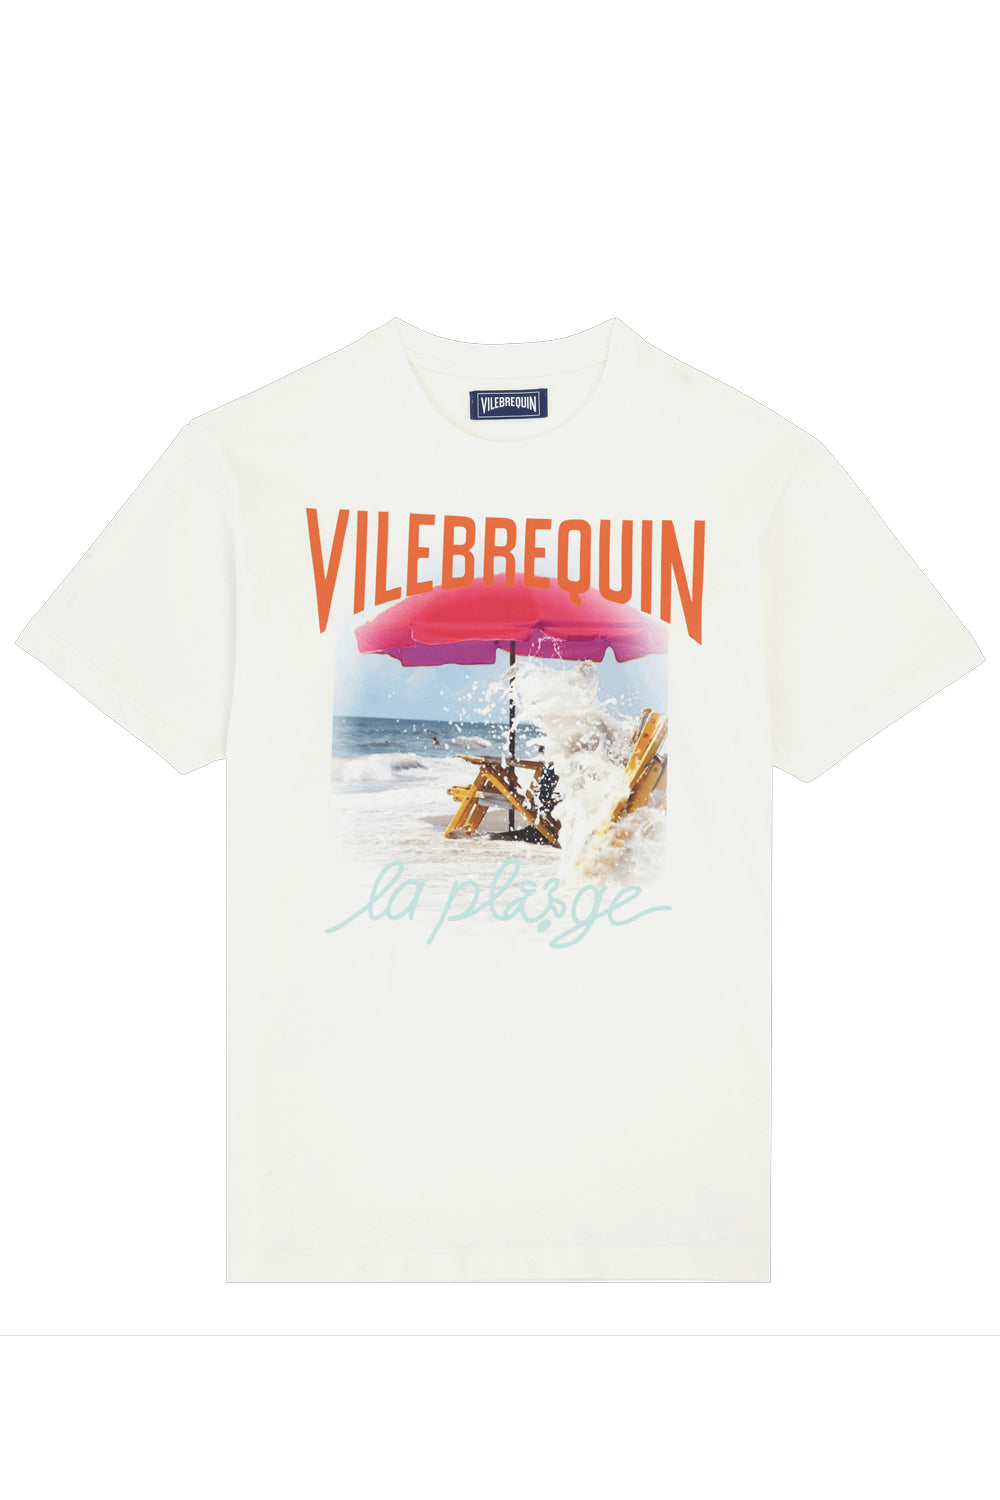 Image of VILEBREQUIN T-shirt Wave on VBQ Beach